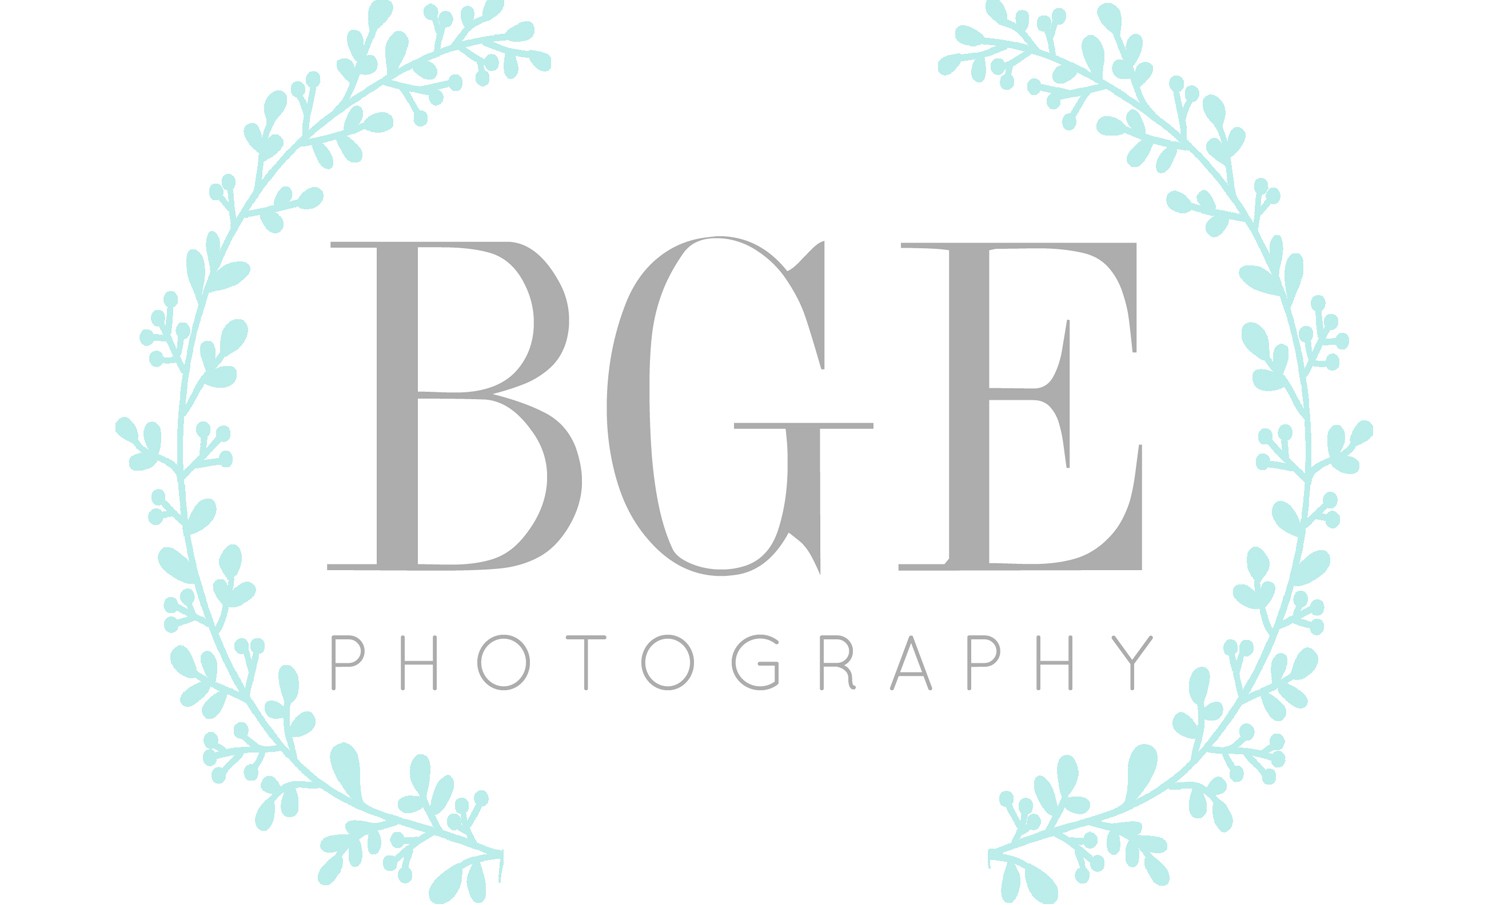 bgephotography